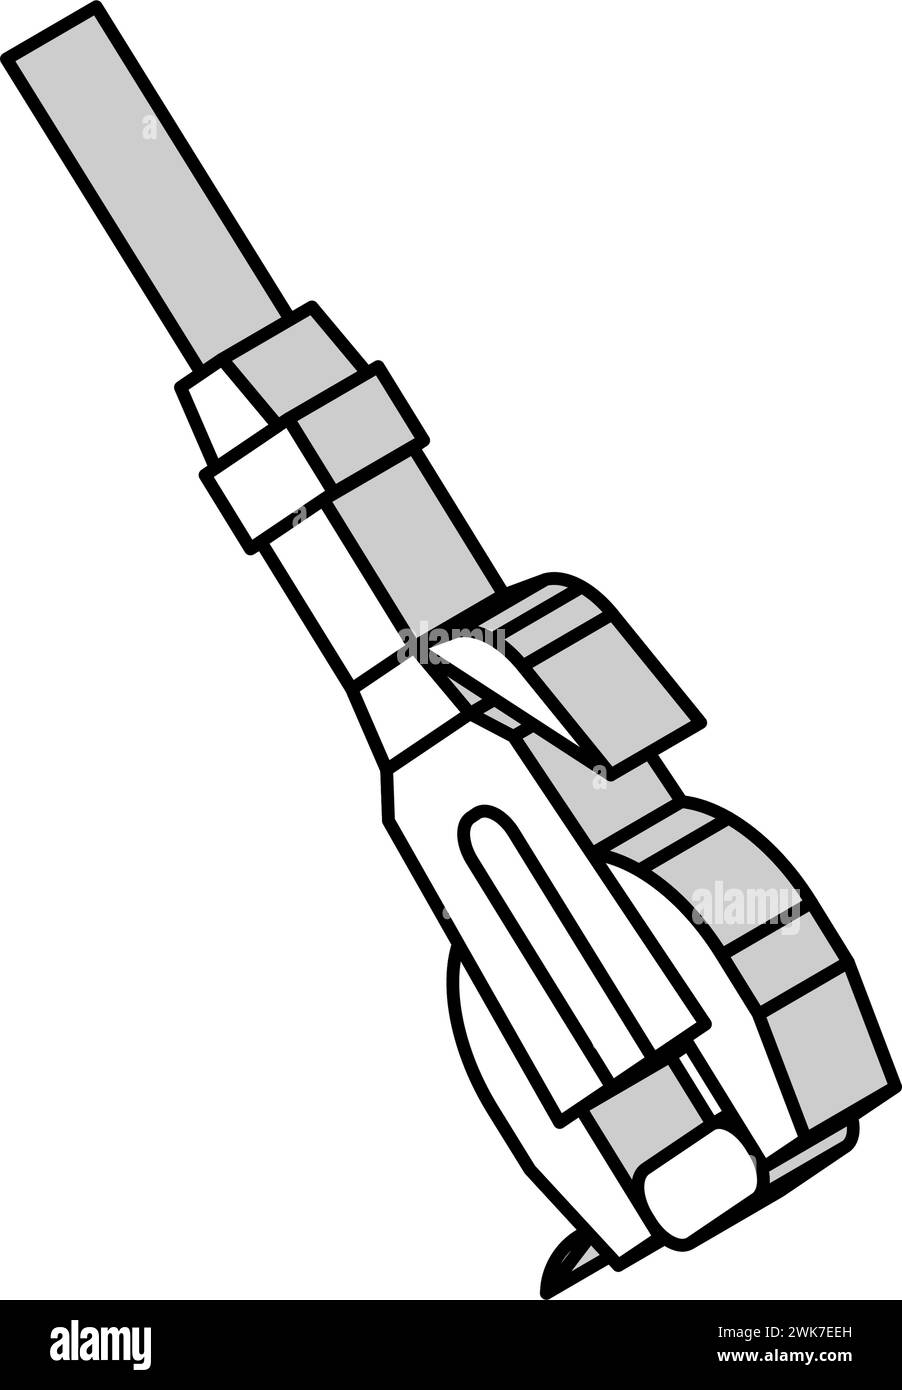 Blechhammer-Werkzeug Isometrische Symbolvektorillustration Stock Vektor